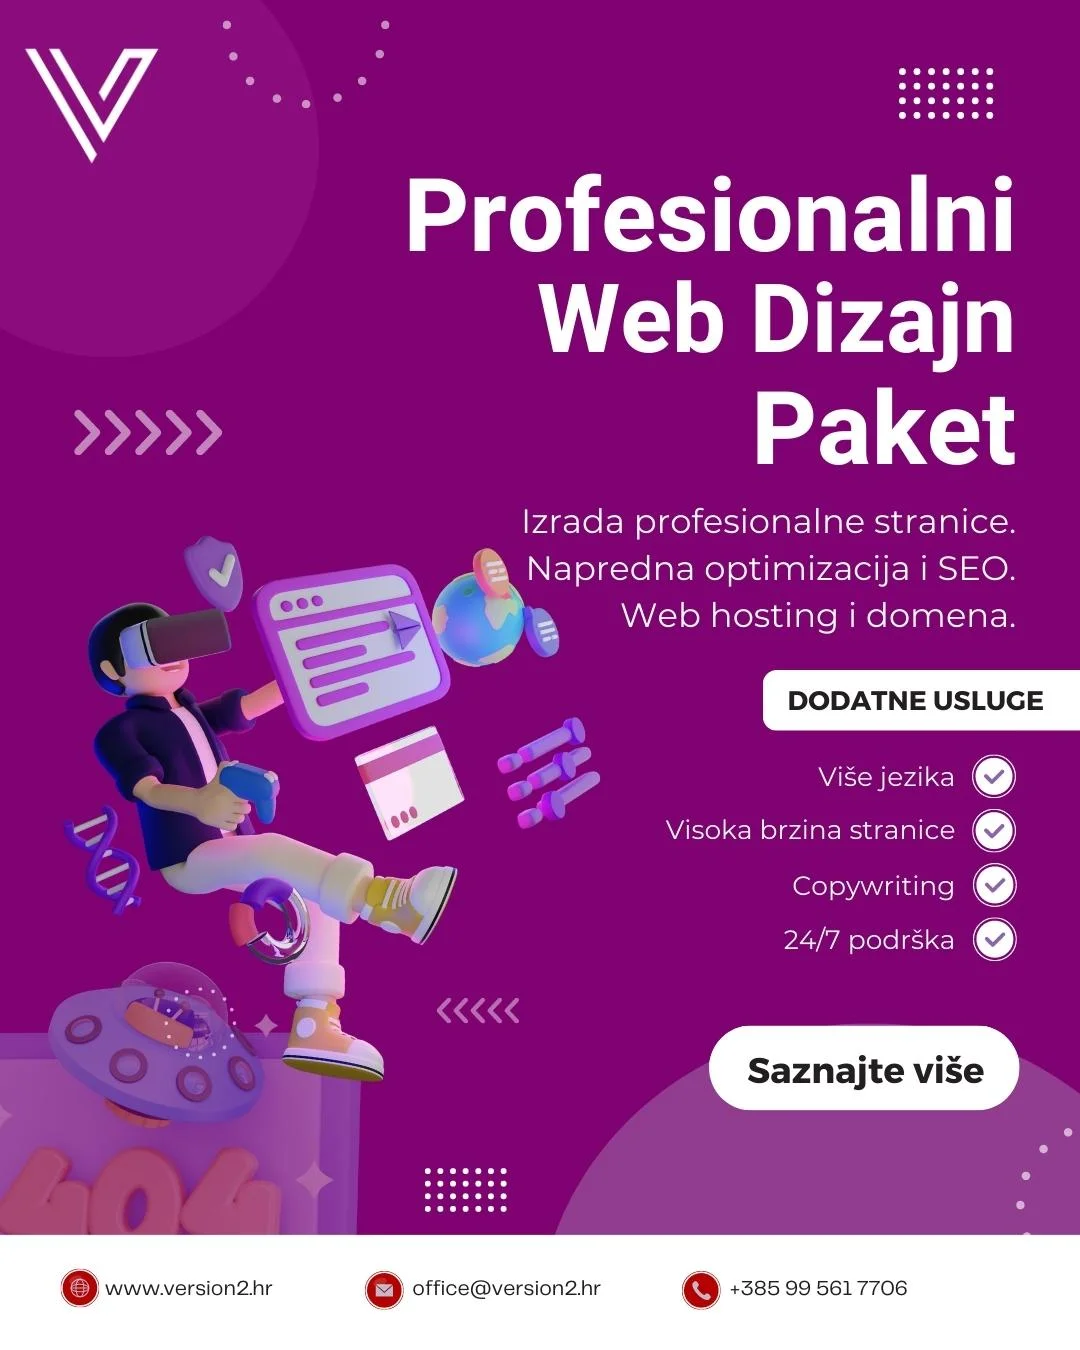 Version2, Agency for Digital Marketing, Web Design, Social Networks, Paid Ads, SEO, Copywriting, Version 2, Version2 Zadar